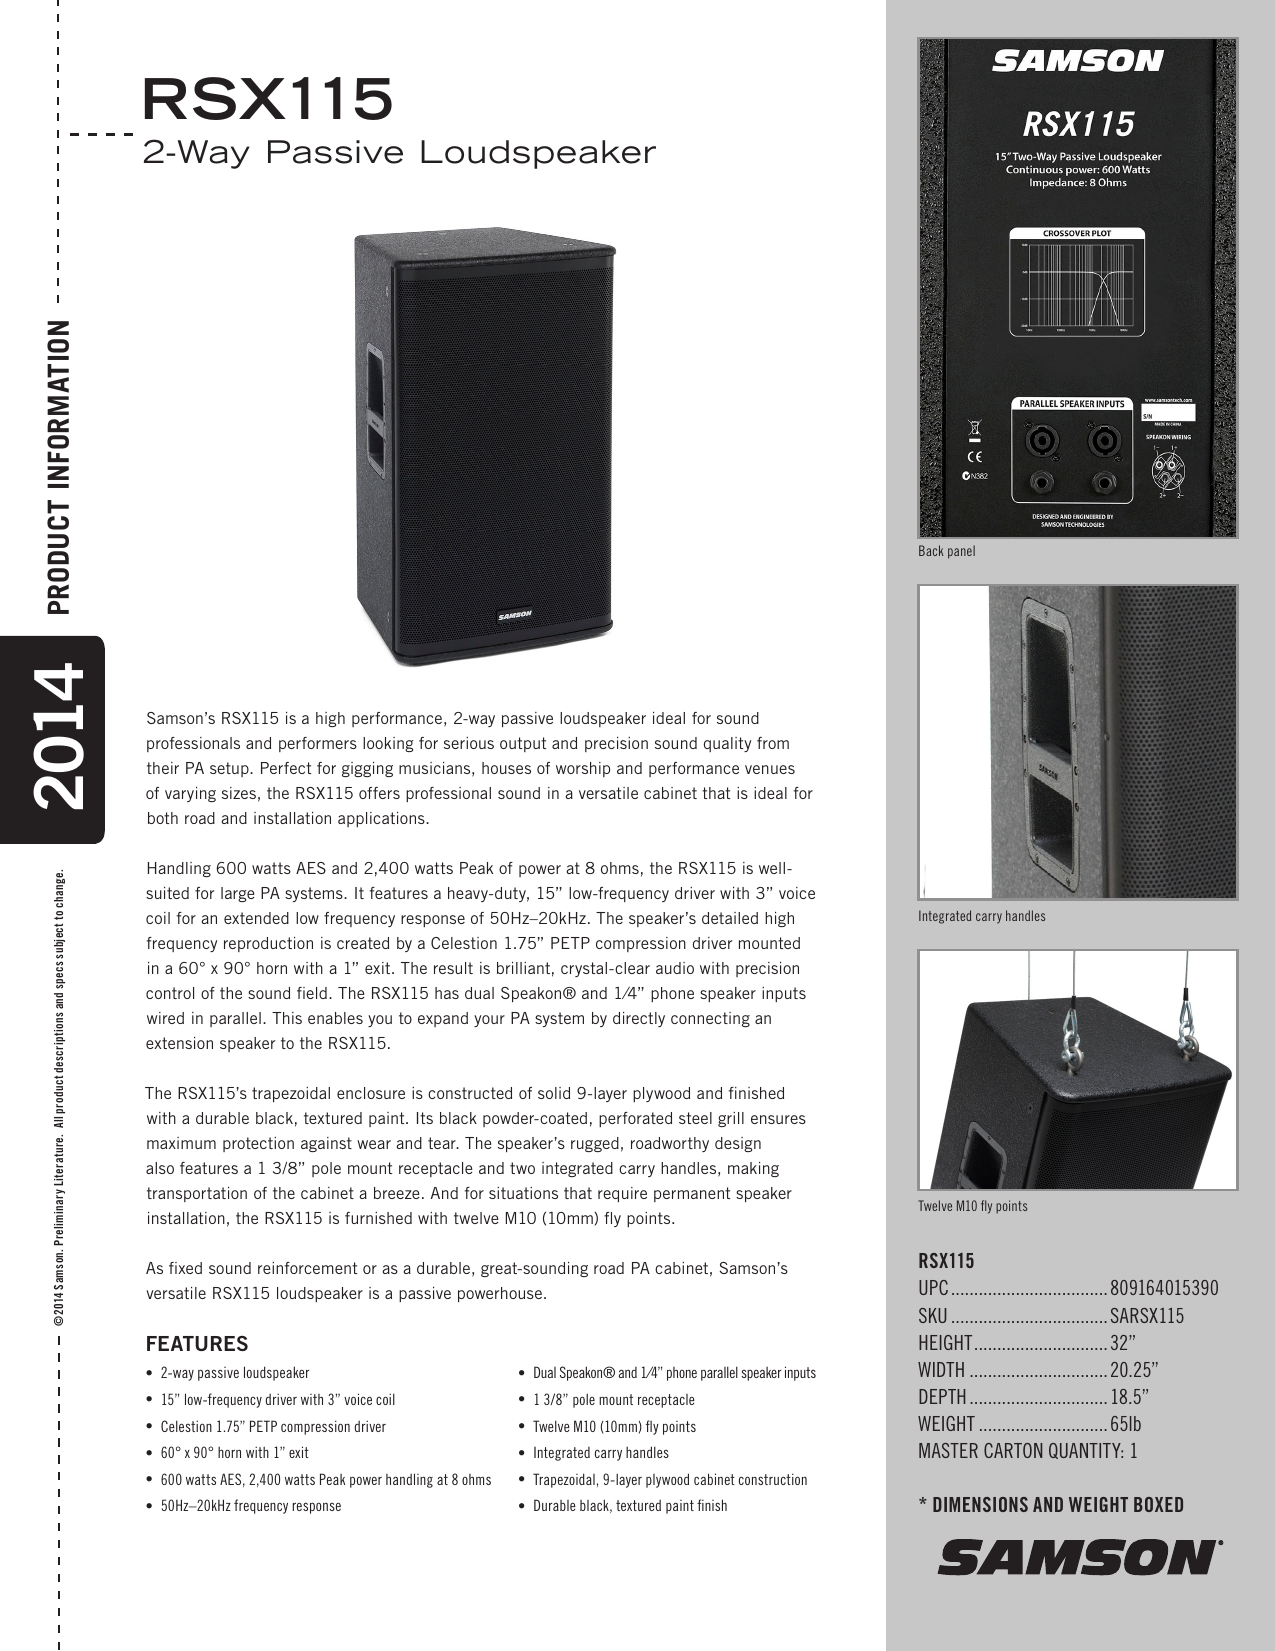 Samson RSX115 2-Way Passive Loudspeaker